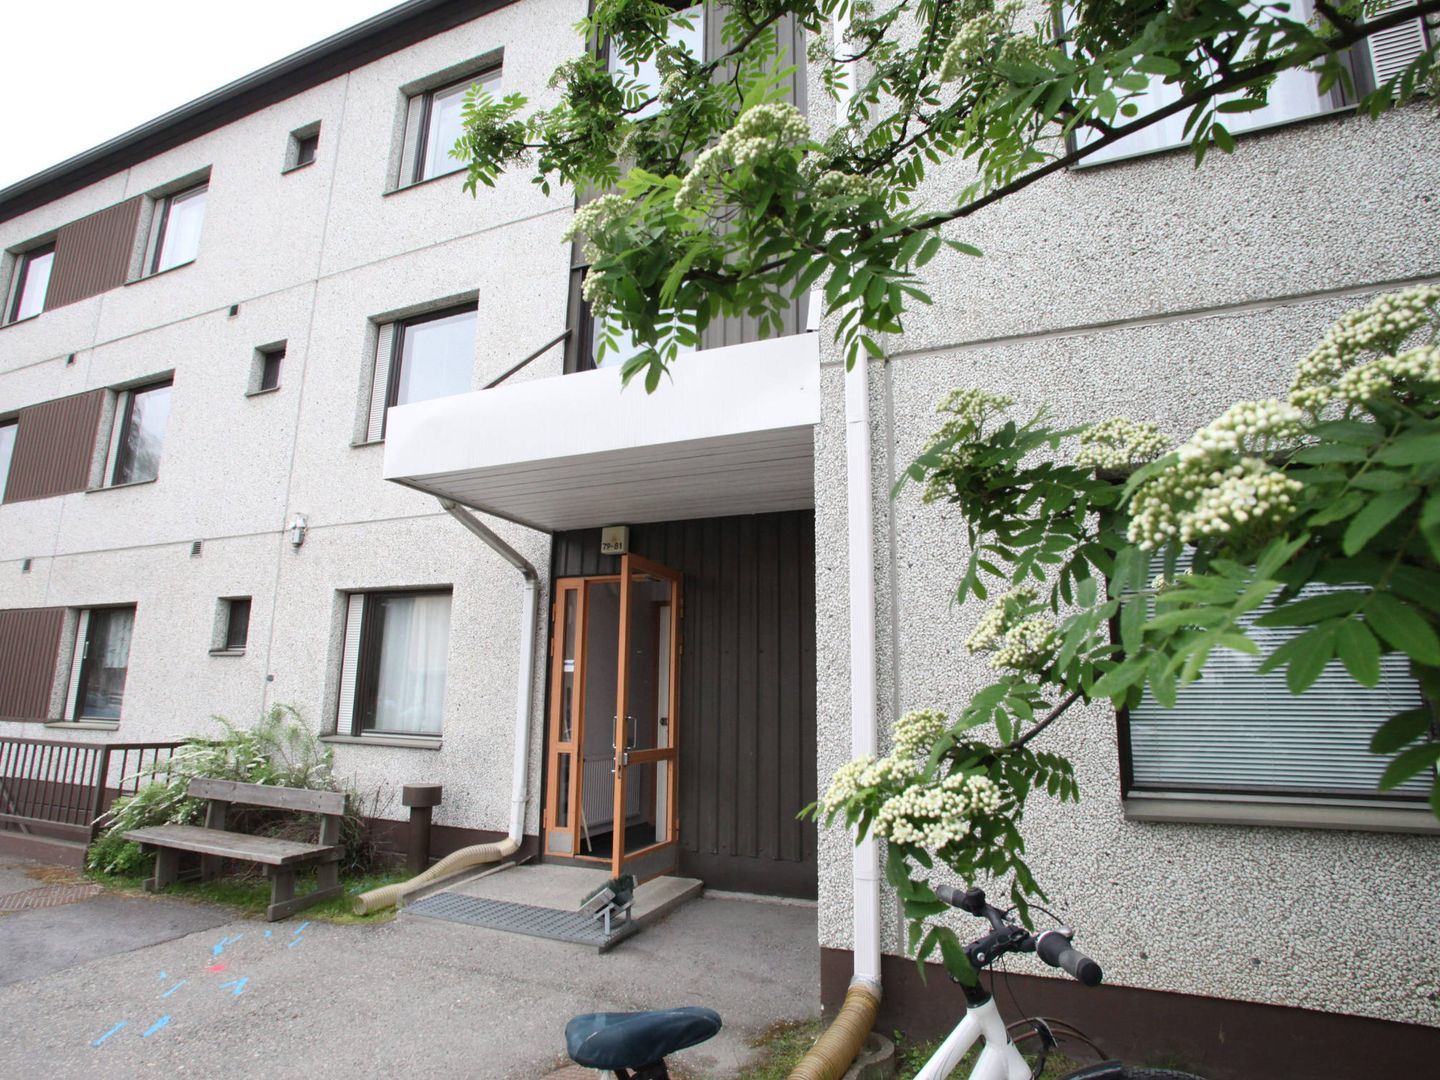 Vista de un edificio típico de apartamentos finlandés, en Oulu, en 2014. (Reuters)